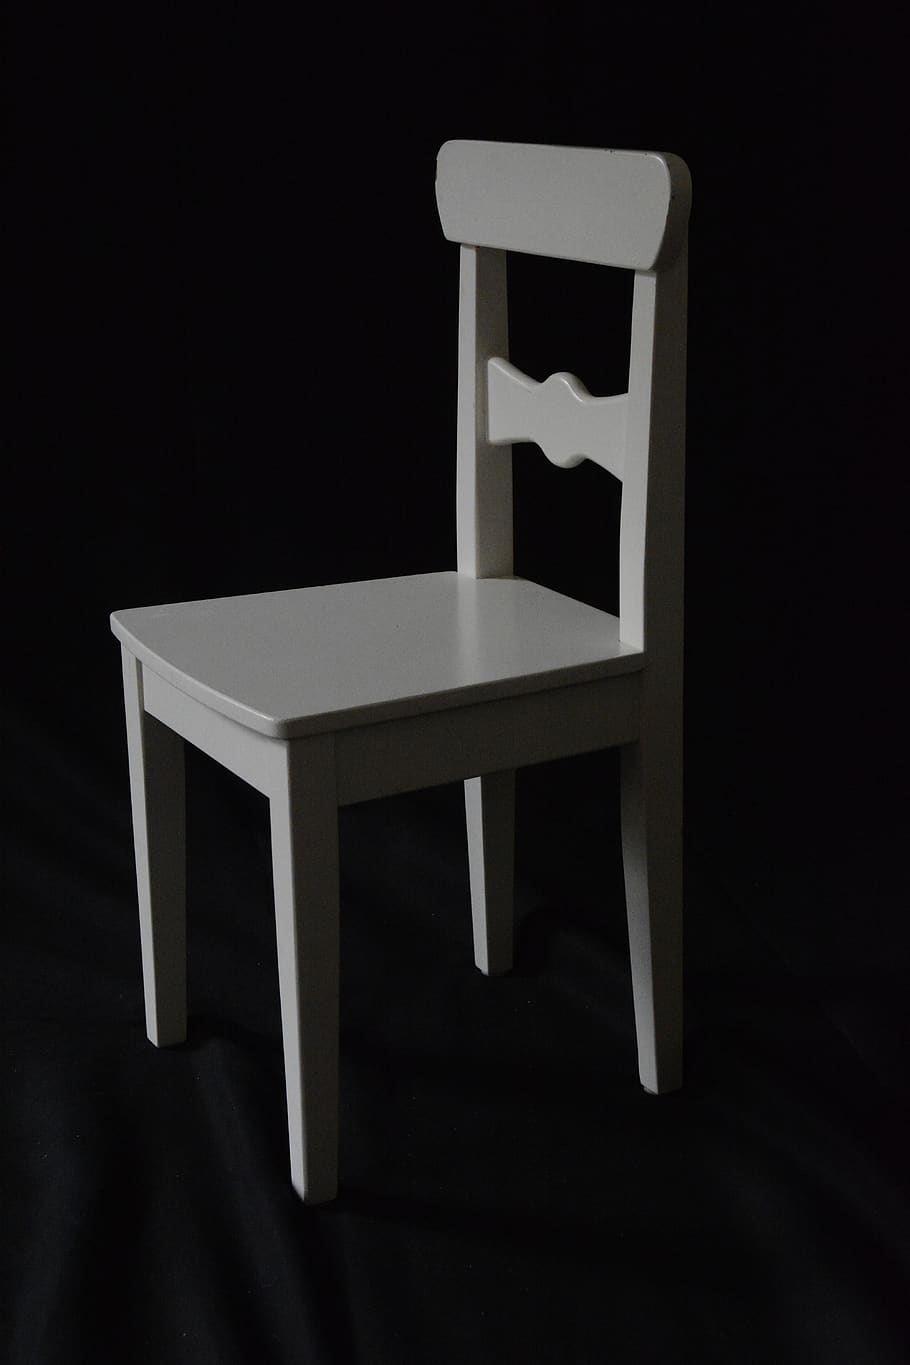 Chair Black White Sitting Ikea Aesthetic Nice Black